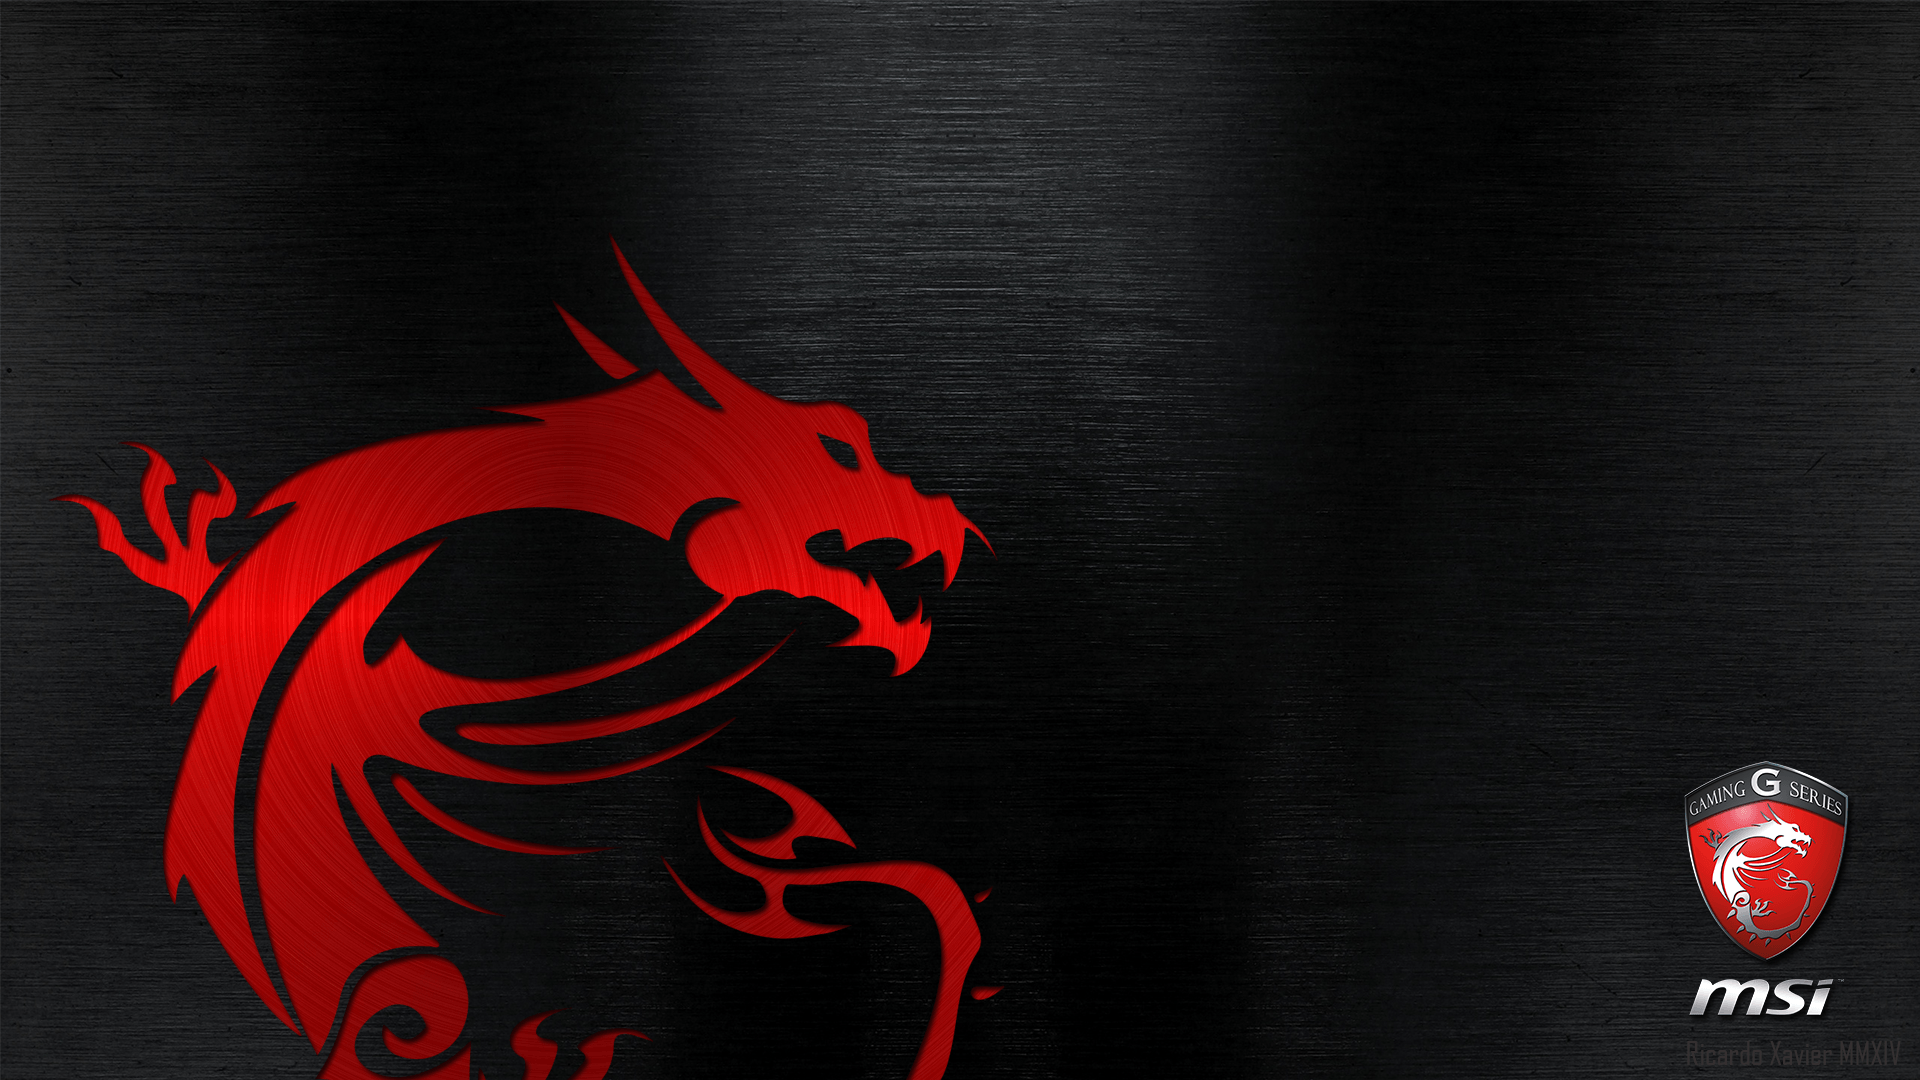 Razer inc logo background HD wallpaper download